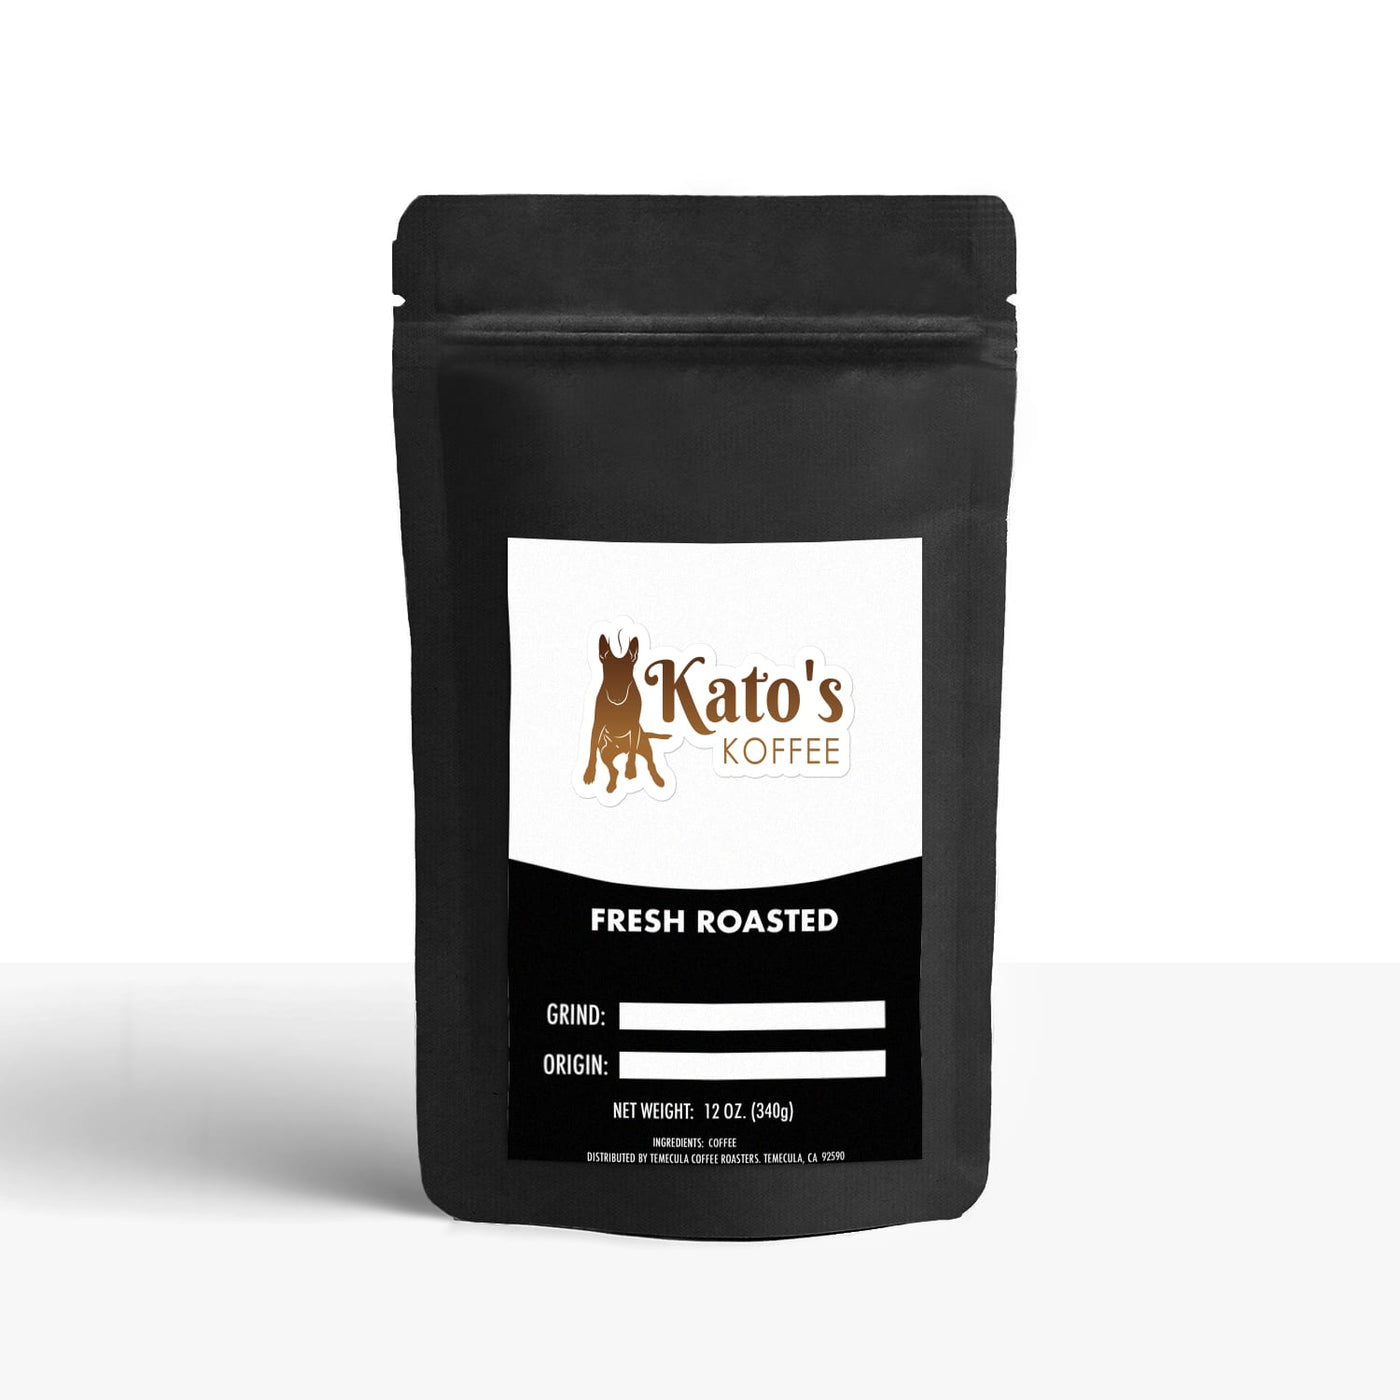 6 Bean Blend - Kato's Koffee